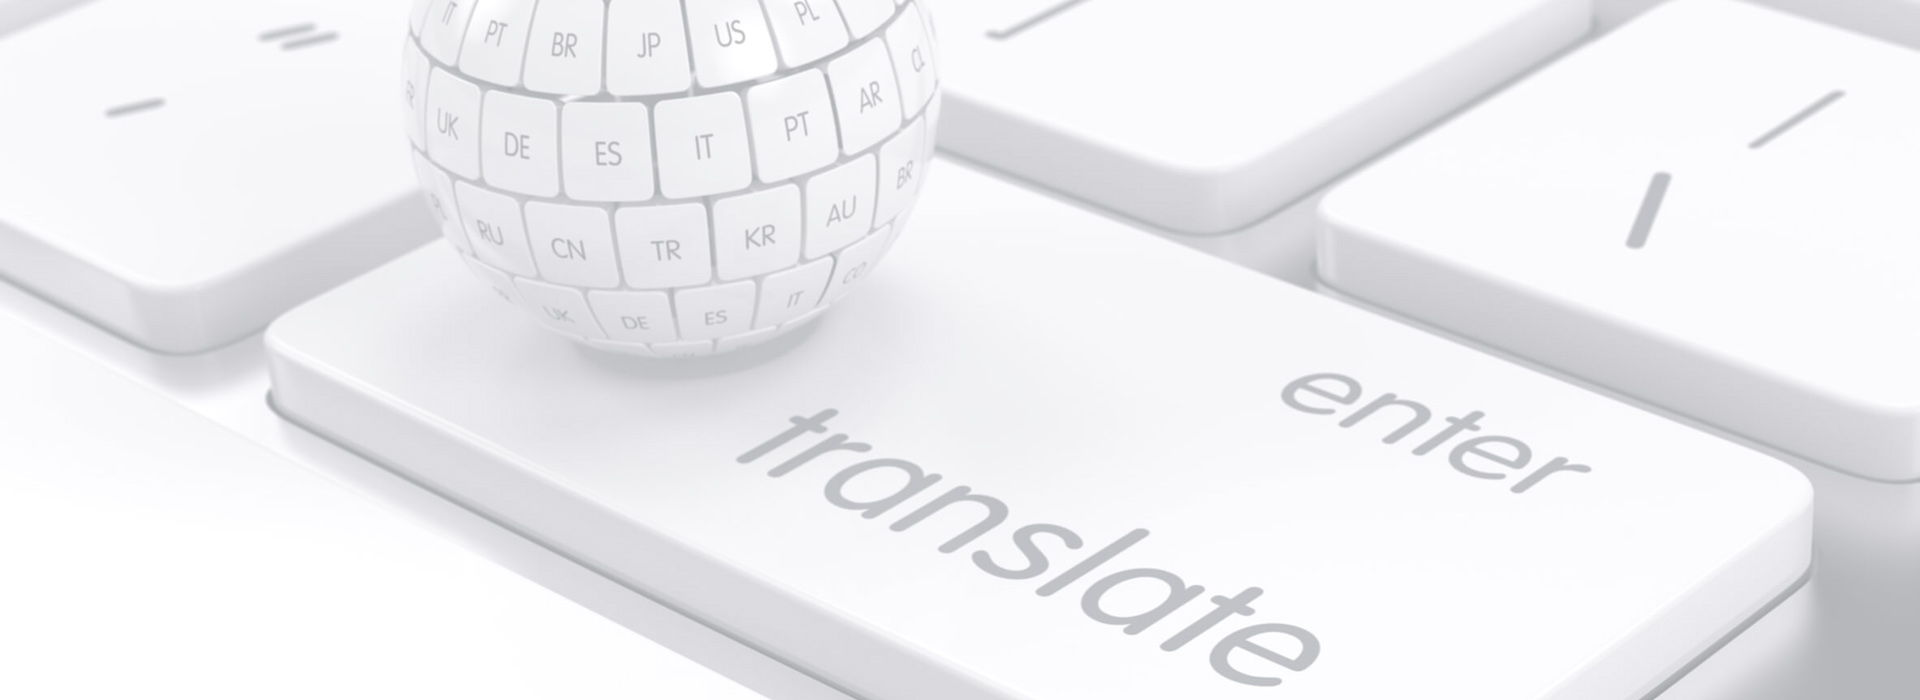 Prevodilačke usluge sa i bez overe - pismeni i usmeni prevodi